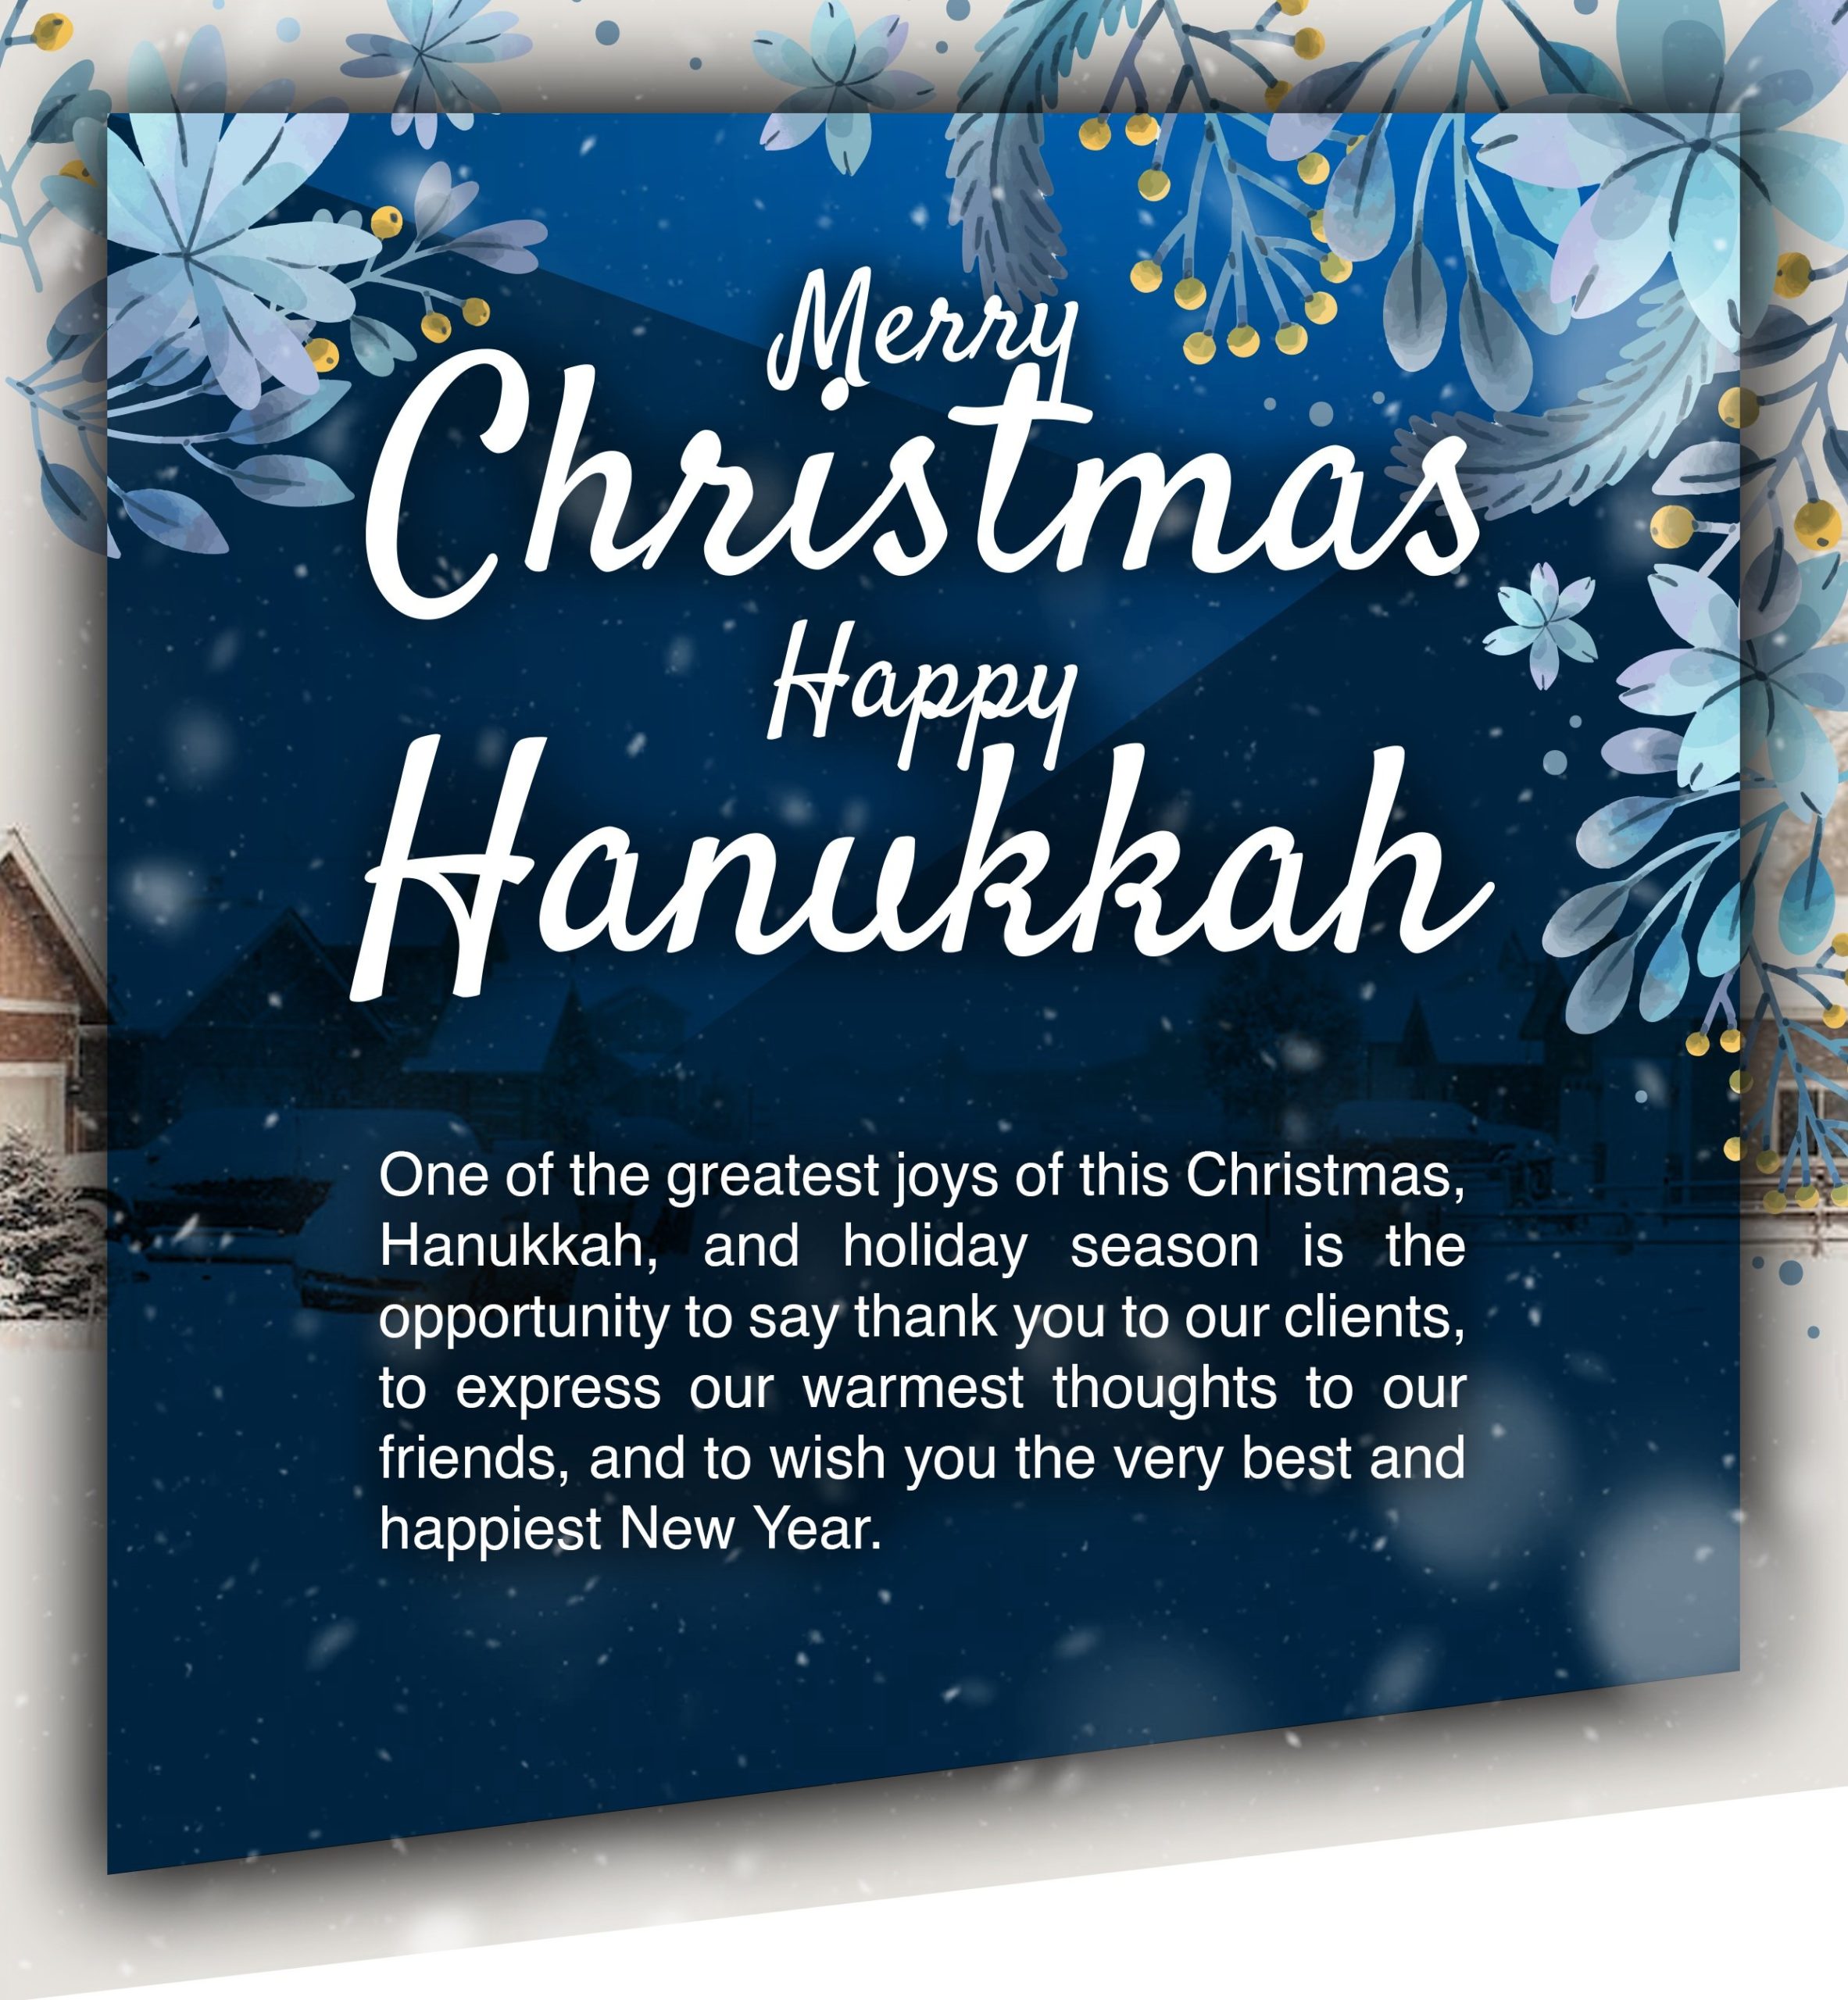 Avant® Advisory Group Wishes You a Merry Christmas and Happy Hanukkah